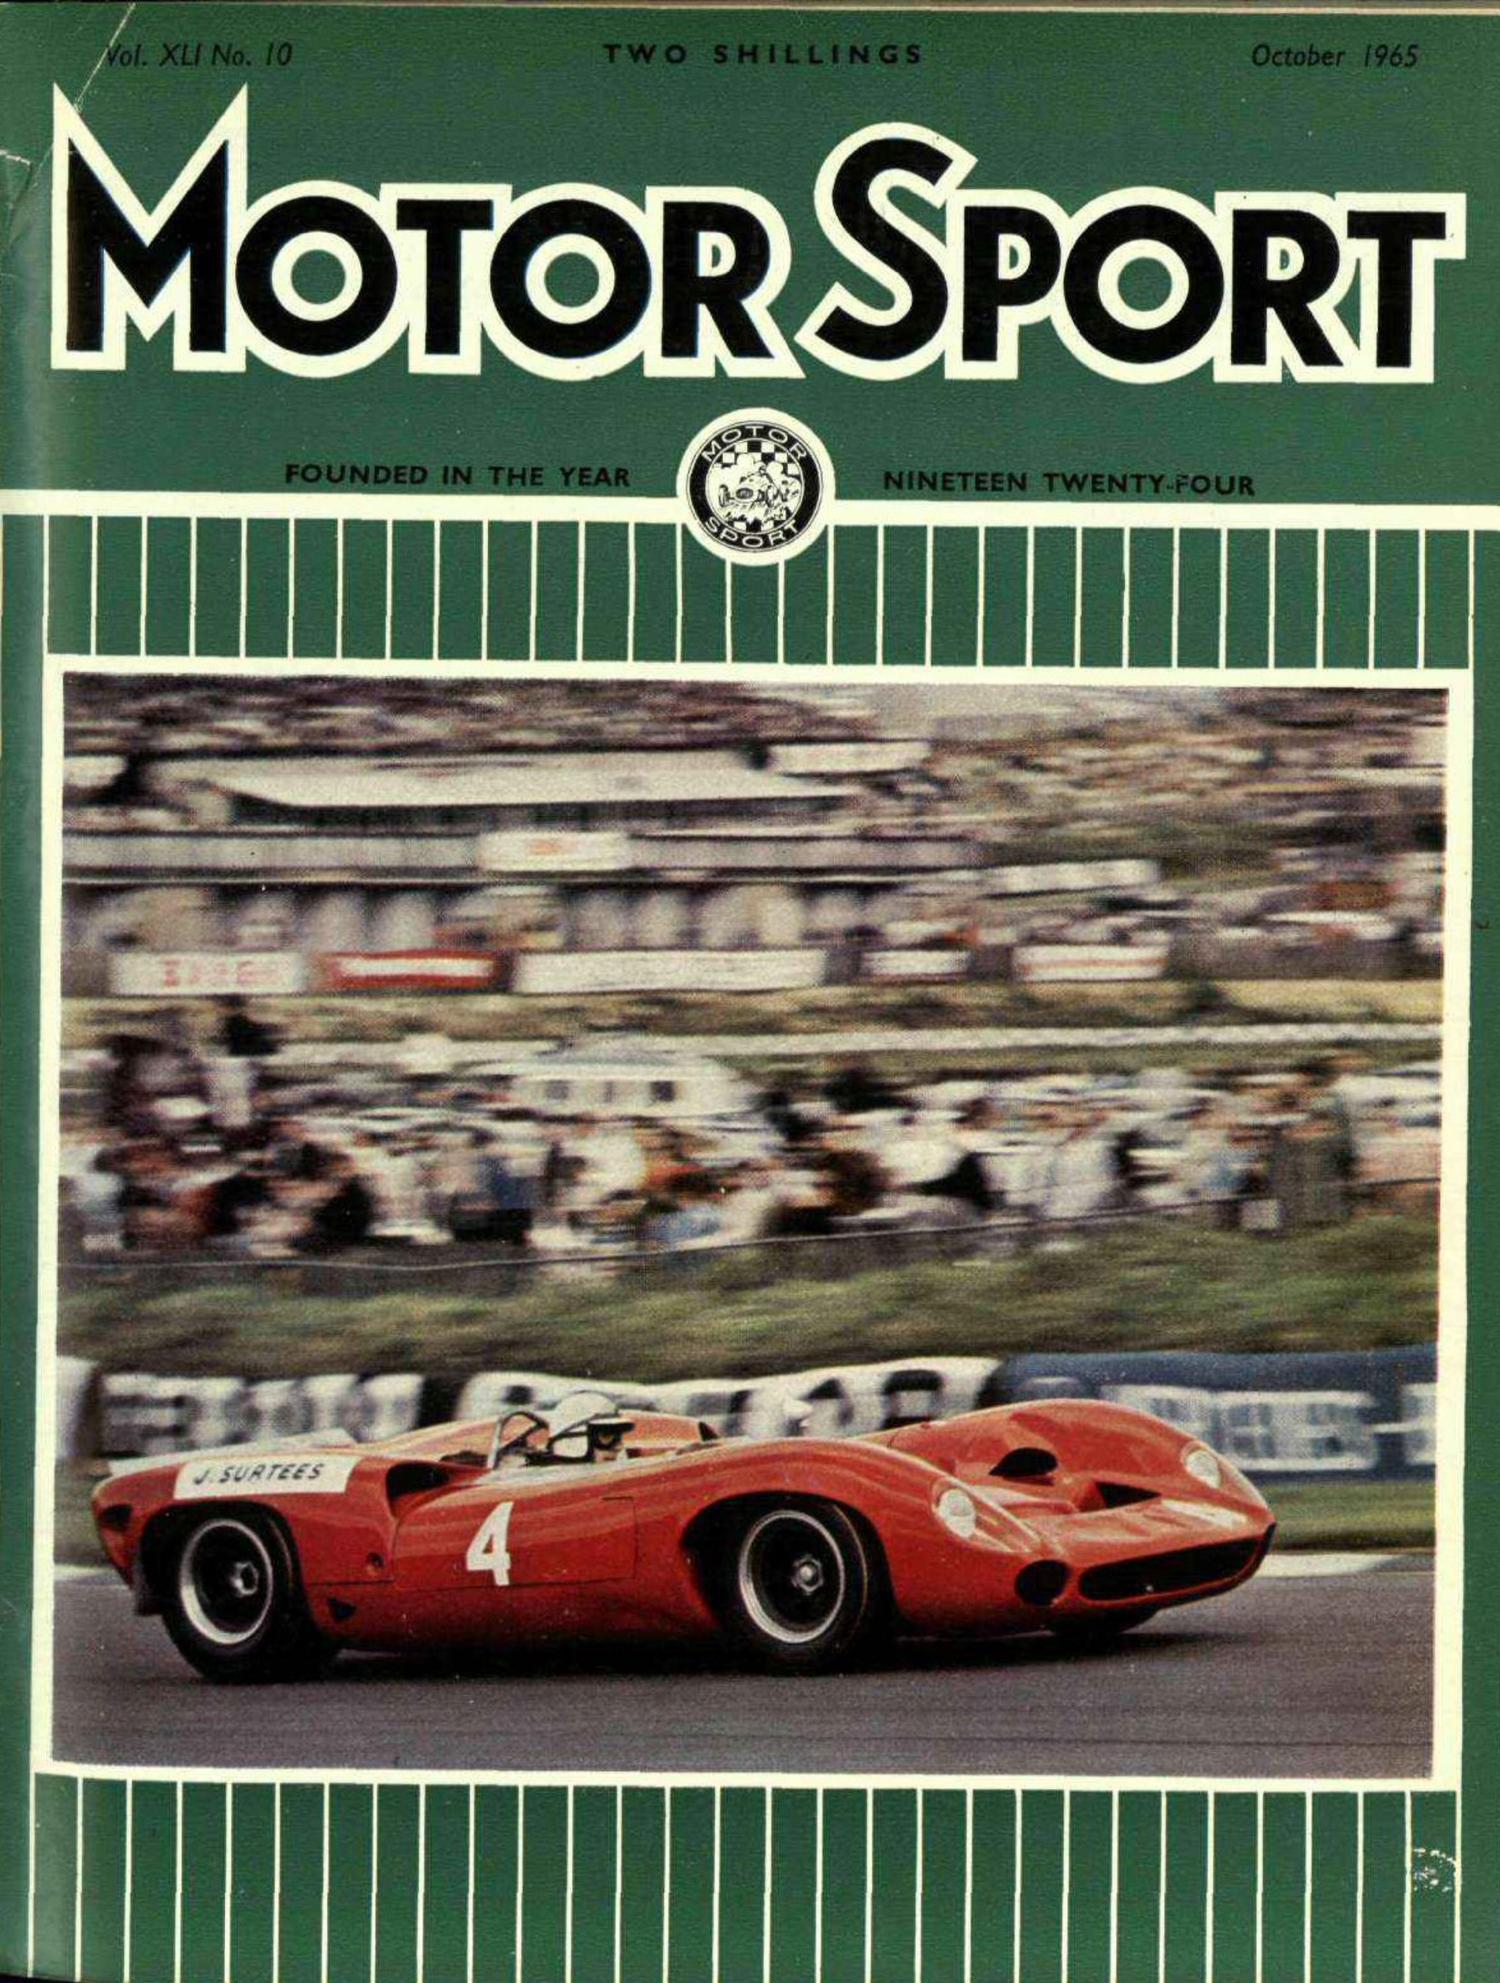 MotorSport Magazine 196510.pdf | DocDroid